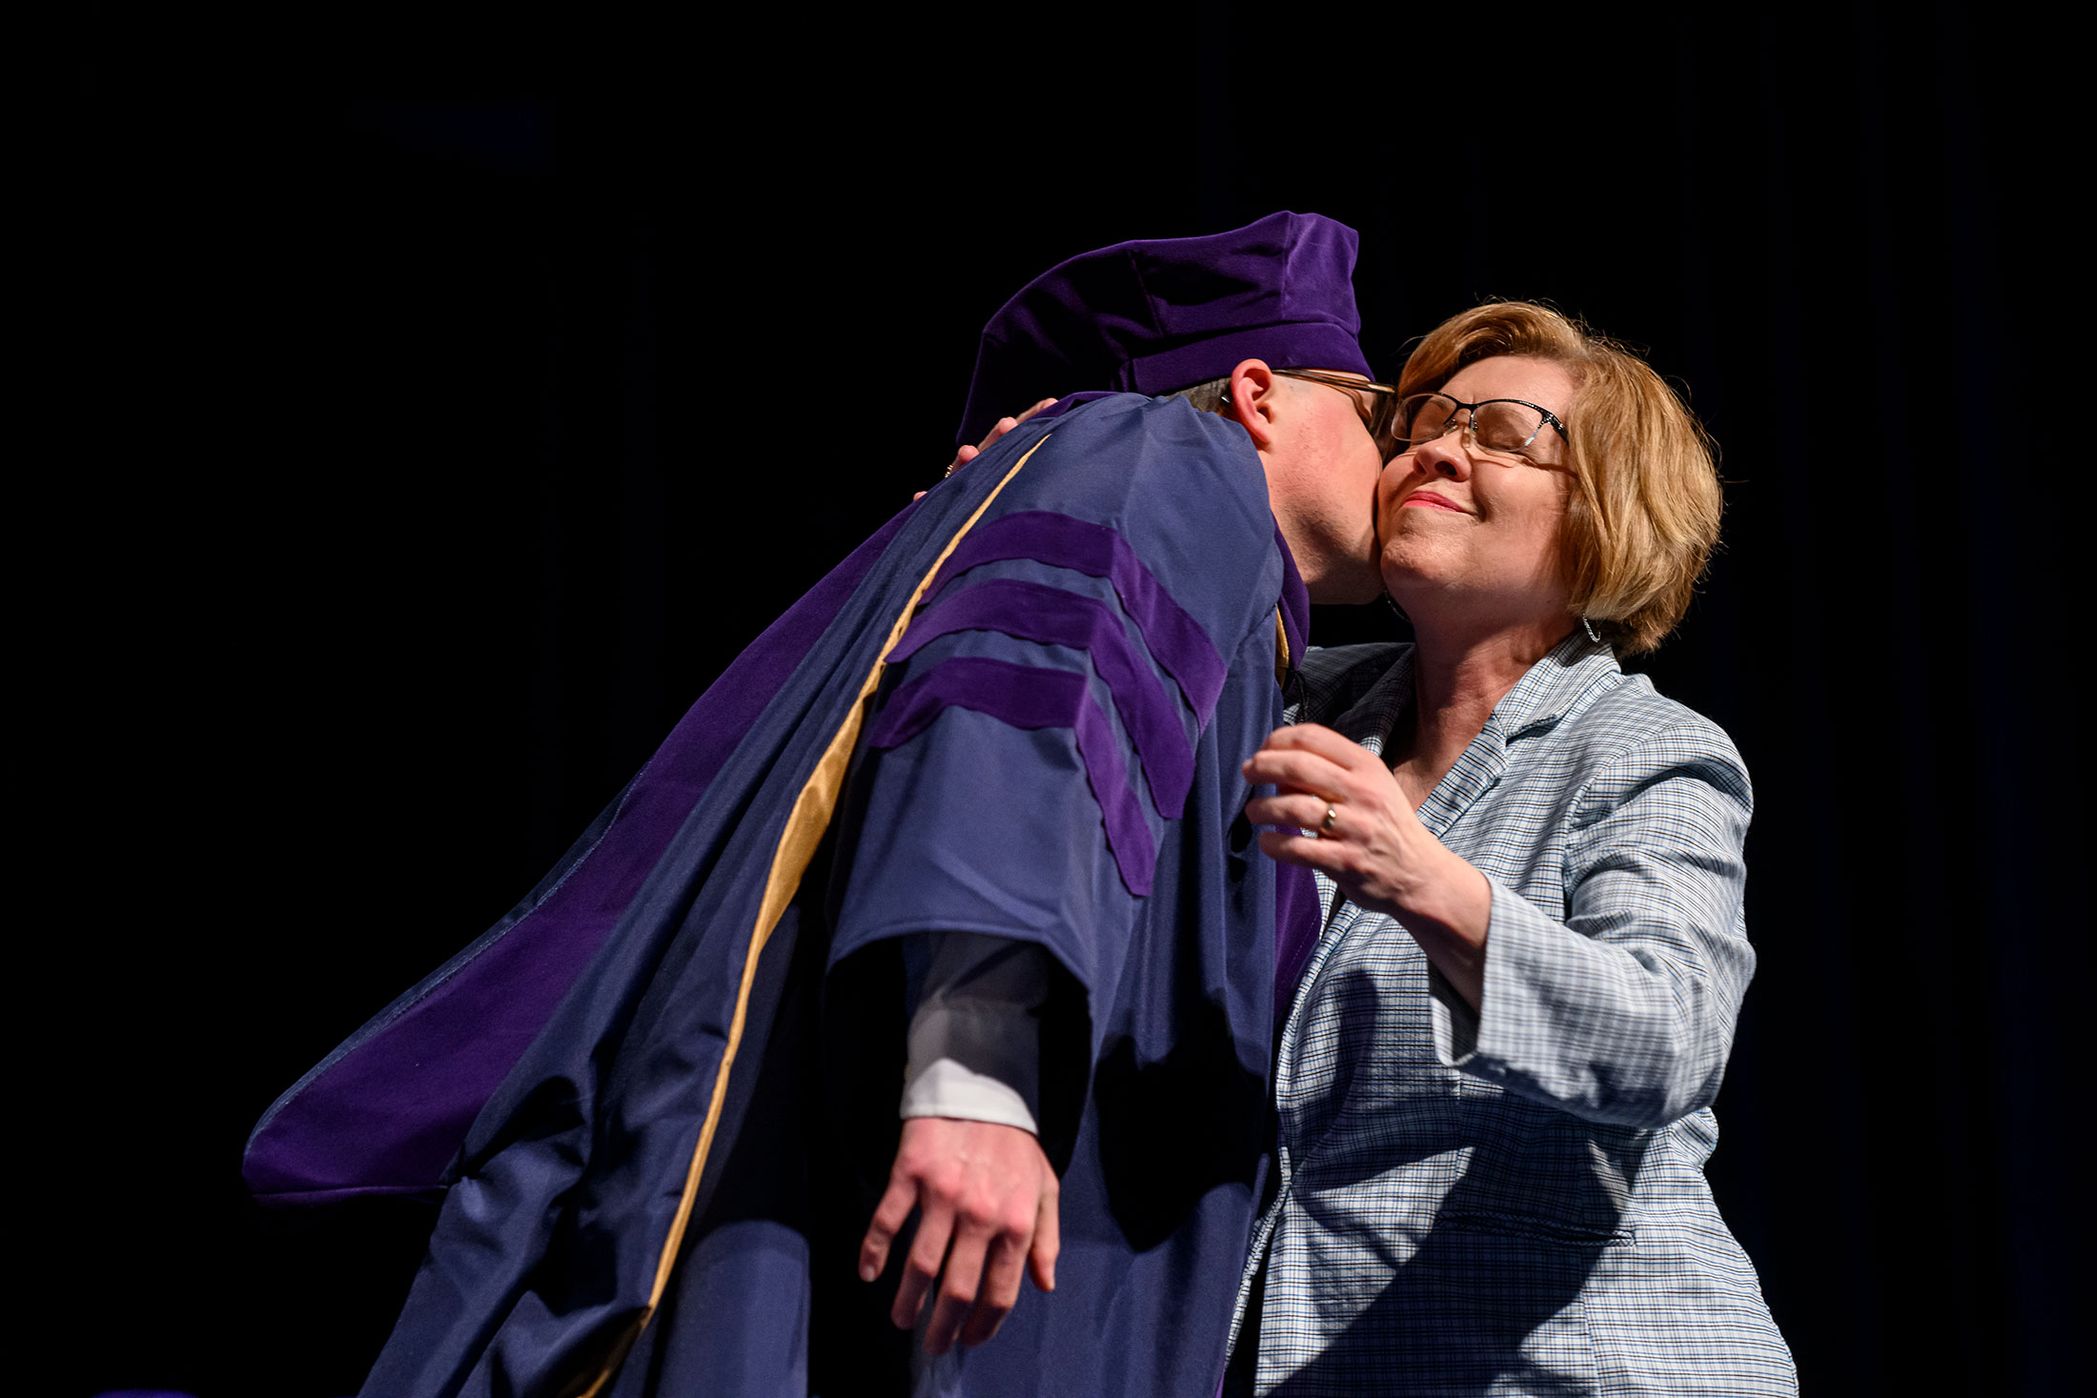 man kisses woman on cheek during graduation ceremonies